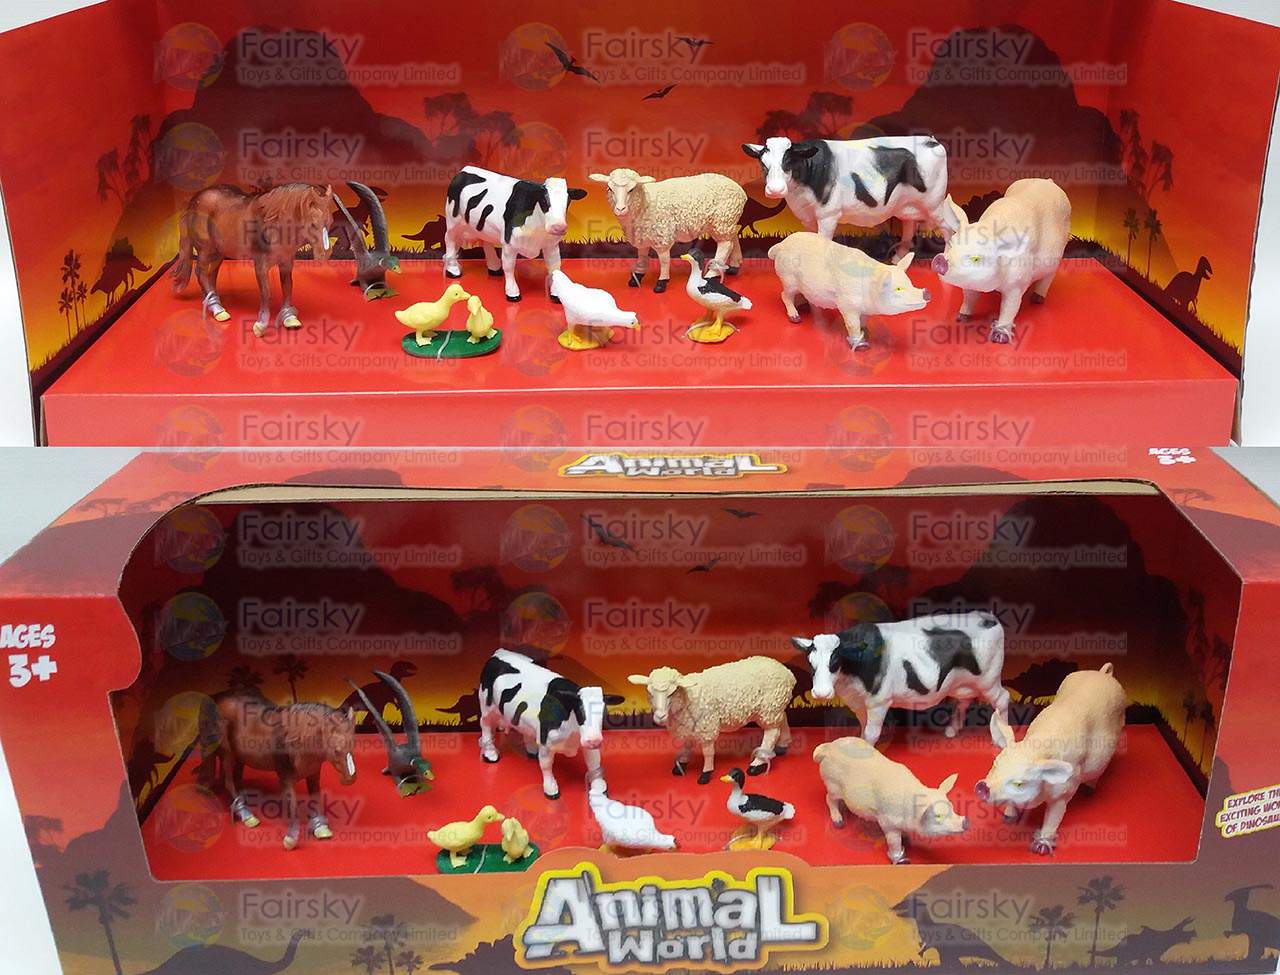 10pcs Farm Animals Set – Fairsky Toys and Gifts Company Limited